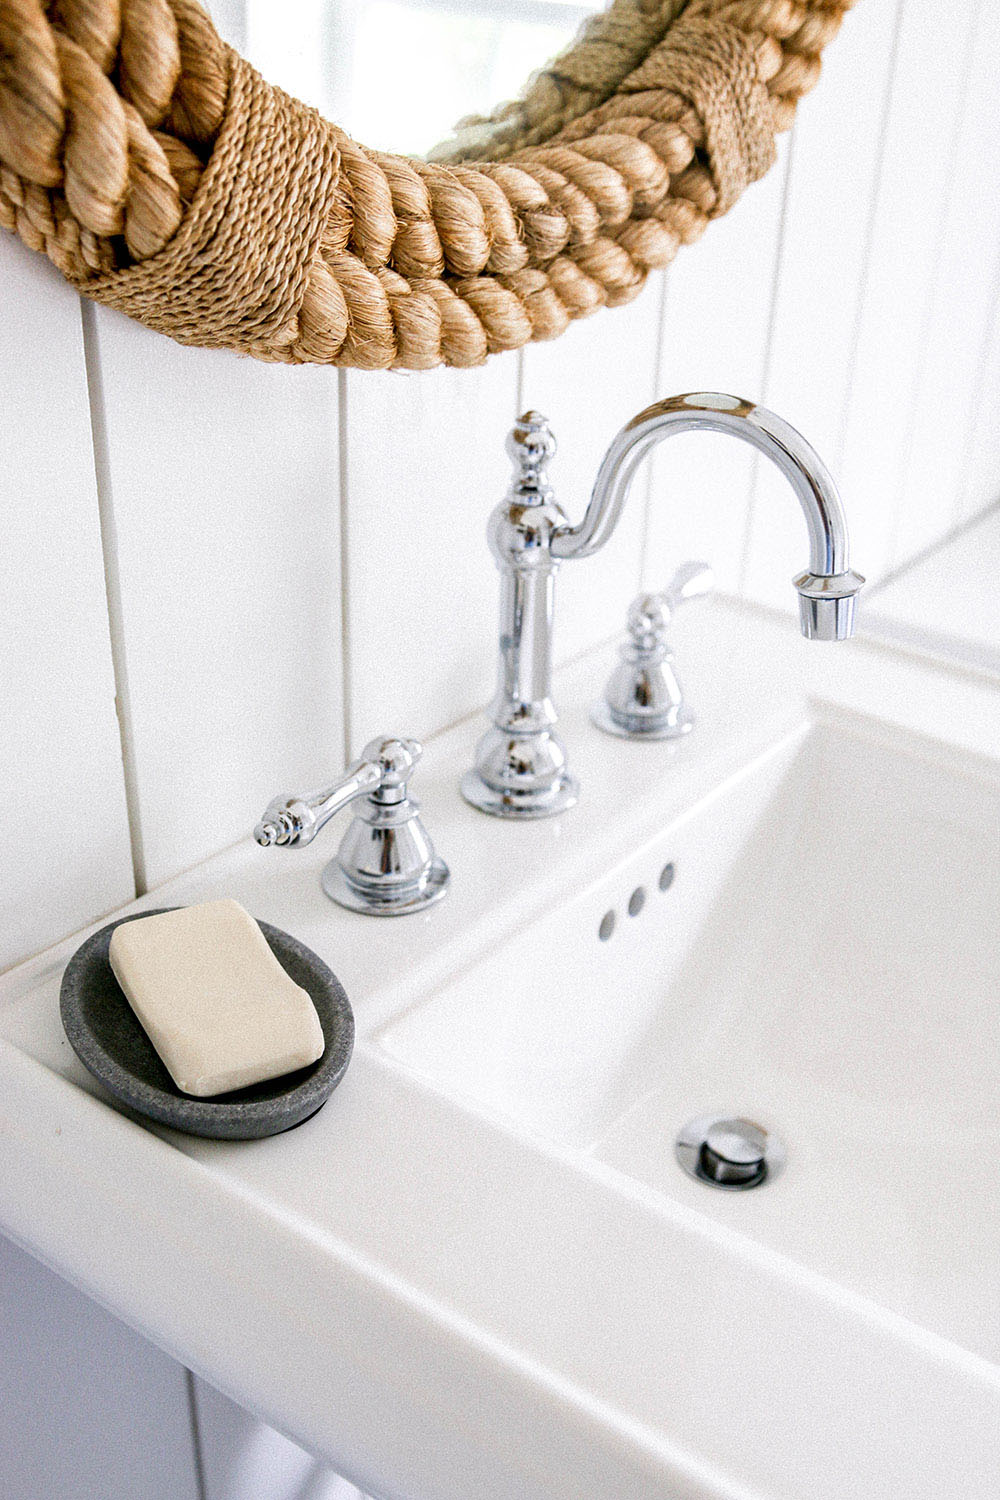 A pedestal sink with a chrome faucet.